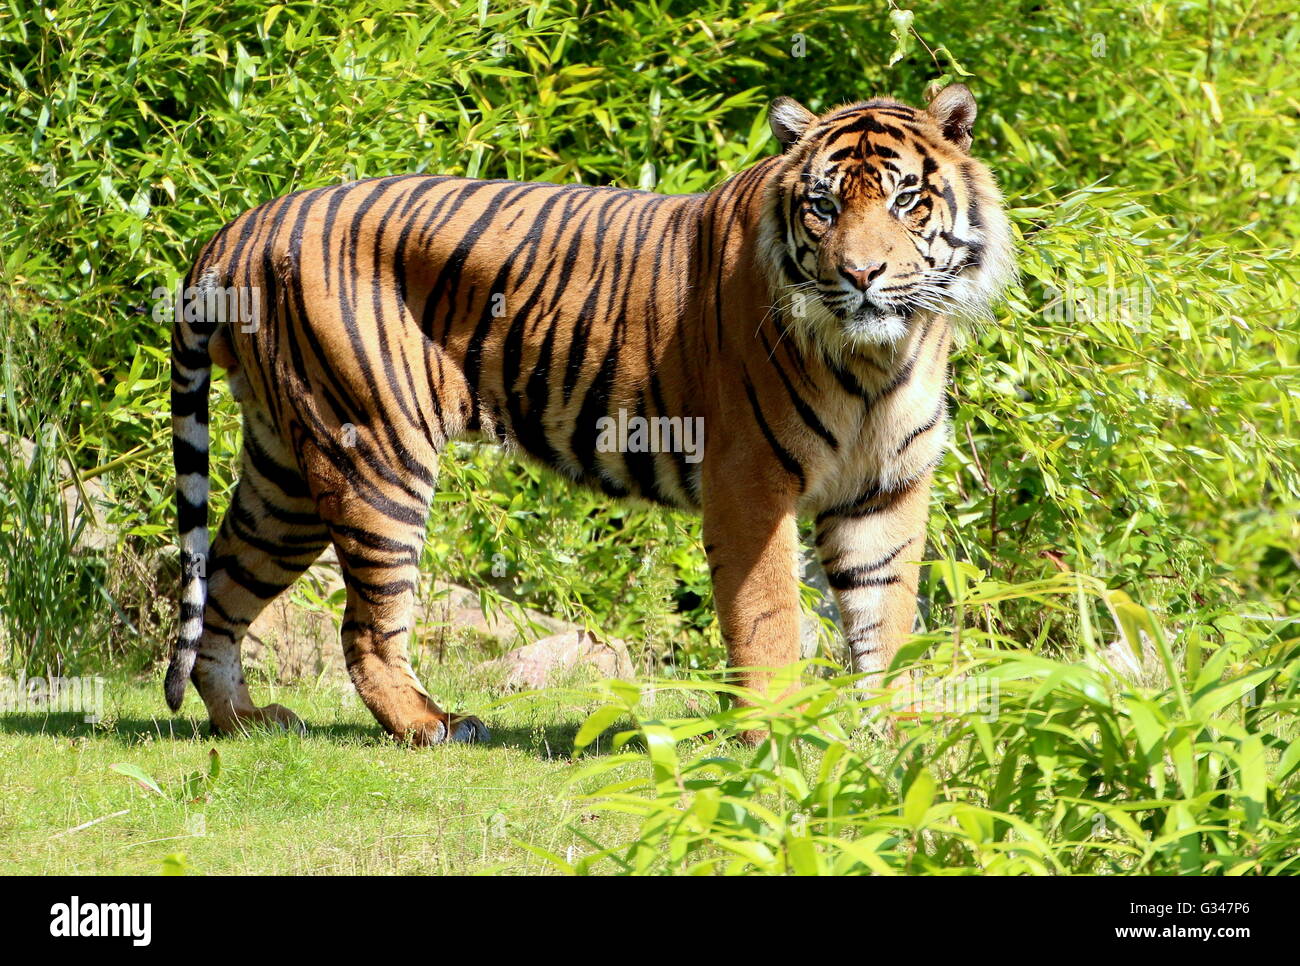 Mature male Sumatran tiger (Panthera tigris sumatrae) seen in profile, facing the camera Stock Photo